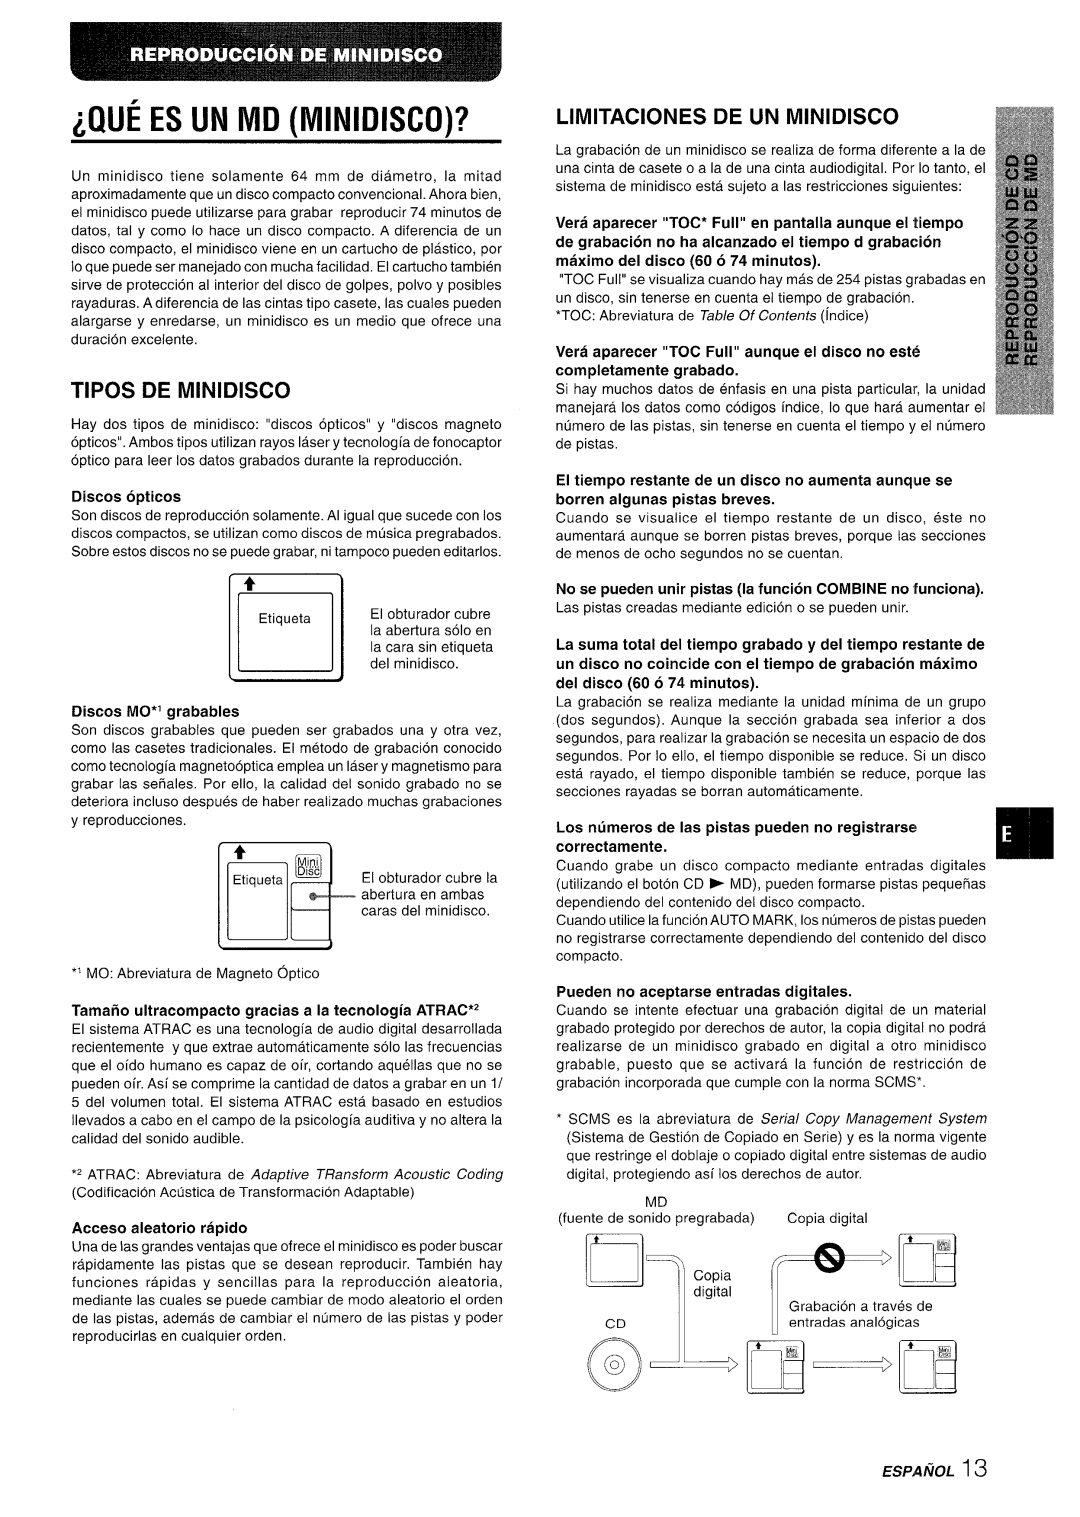 Aiwa XR-MD95 Lque Es Un Md Minidisco?, ES/JAiiOL13, Tipos De Minidisco, Limitaciones De Un Minidisco, r+ ~, Discos opticos 